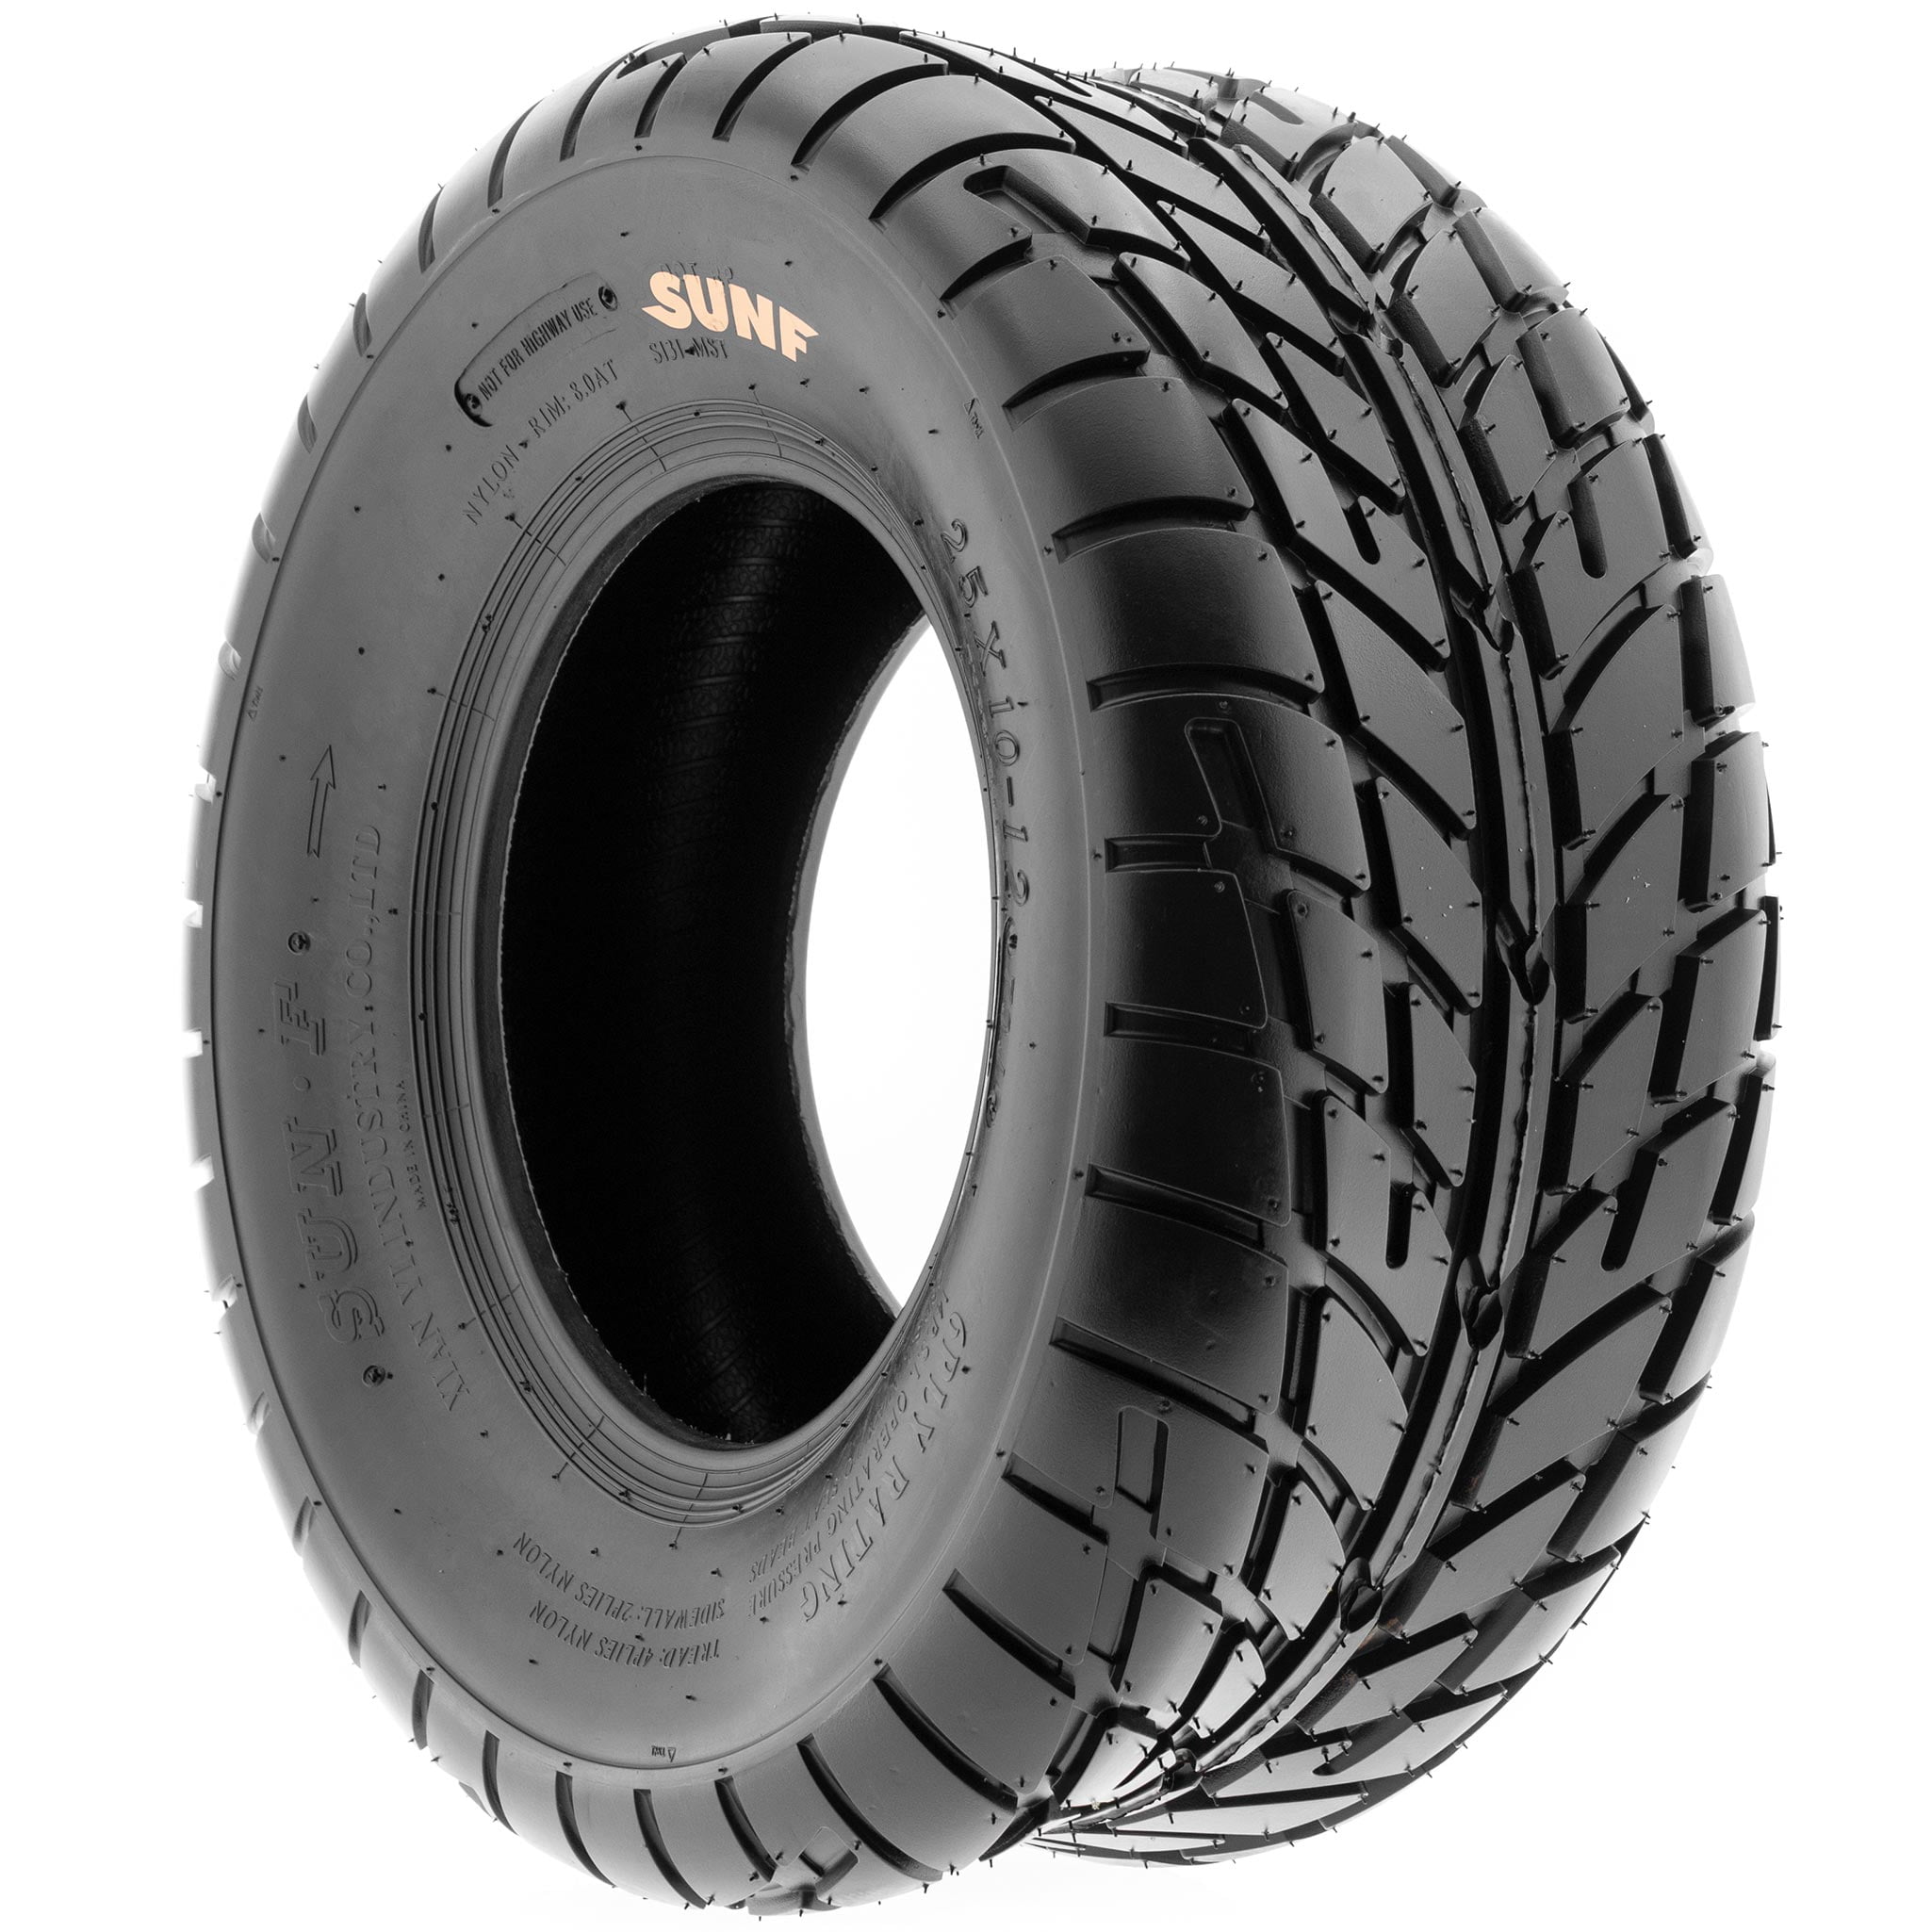 SunF A021 TT Sport ATV UTV Dirt Track & Flat Track Tire 26x8-14 6 PR Tubeless 